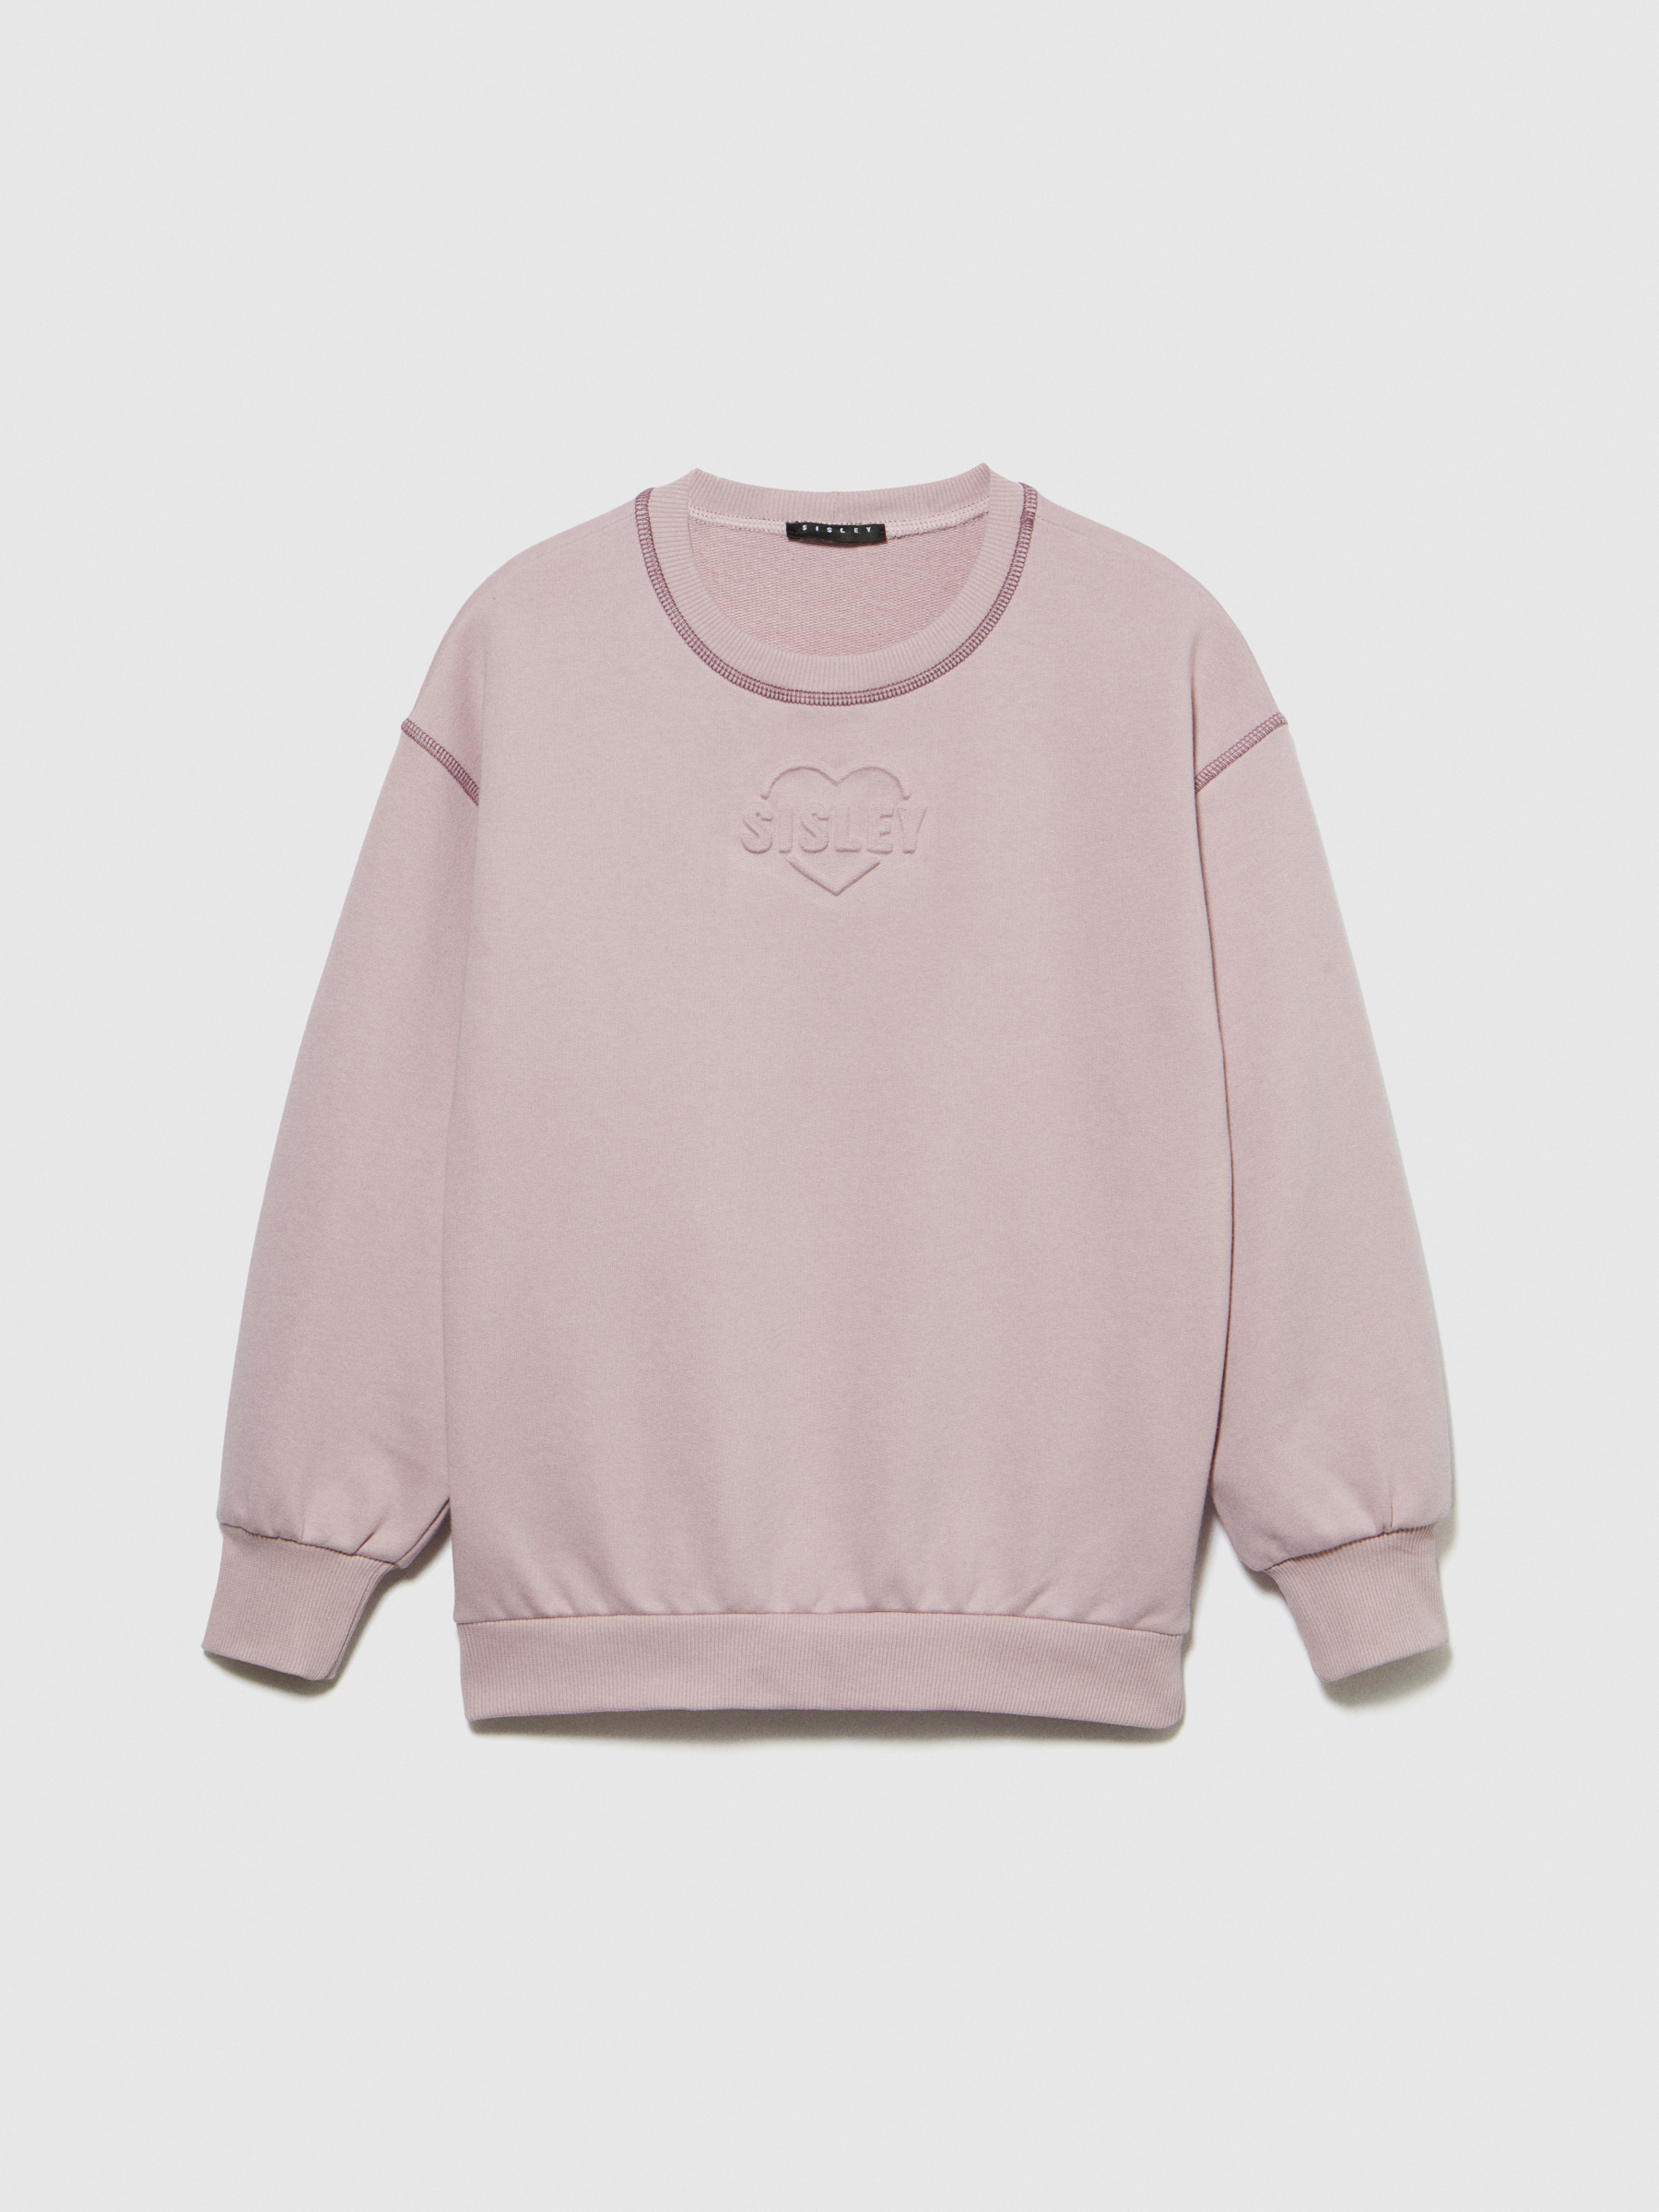 Sisley Young - Sweatshirt With Embossed Print, Woman, Pastel Pink, Size: XL